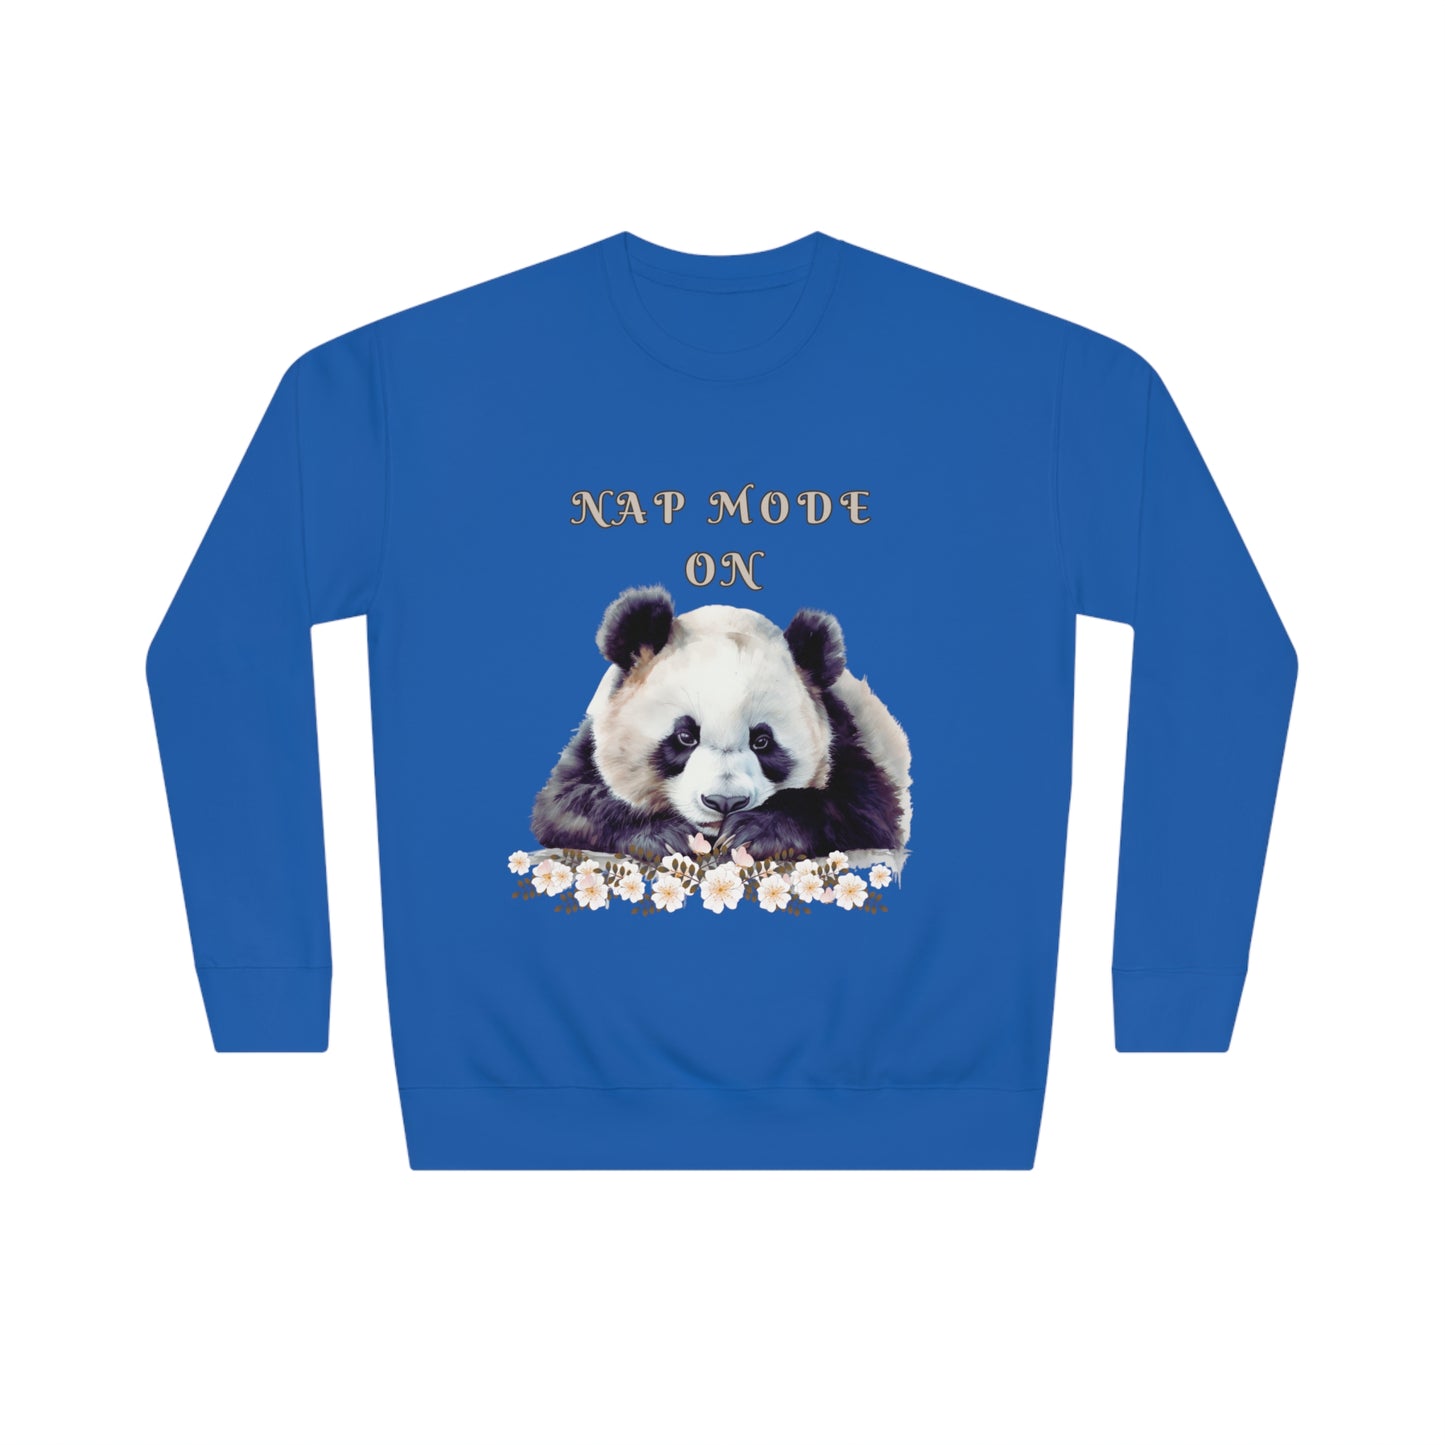 Lazy Panda Nap Mode Sweatshirt | Embrace Cozy Relaxation | Panda Lover Gift - Cozy Sweatshirt Sweatshirt Team Royal S 